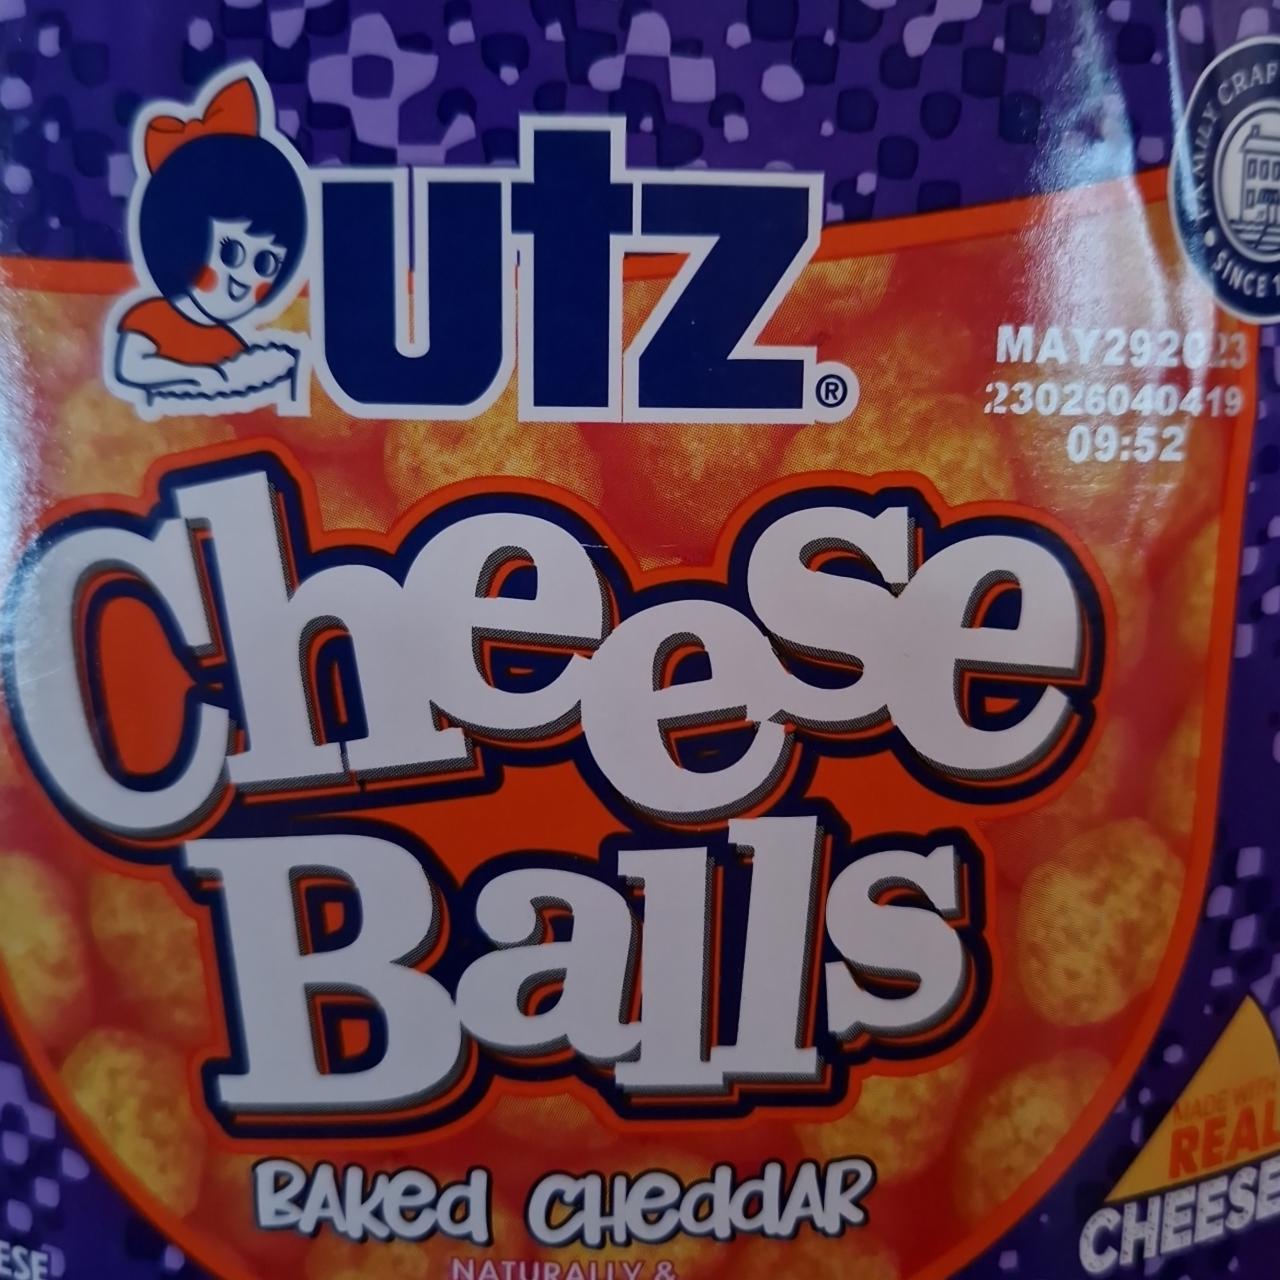 Fotografie - Cheese Balls Baked Cheddar Utz